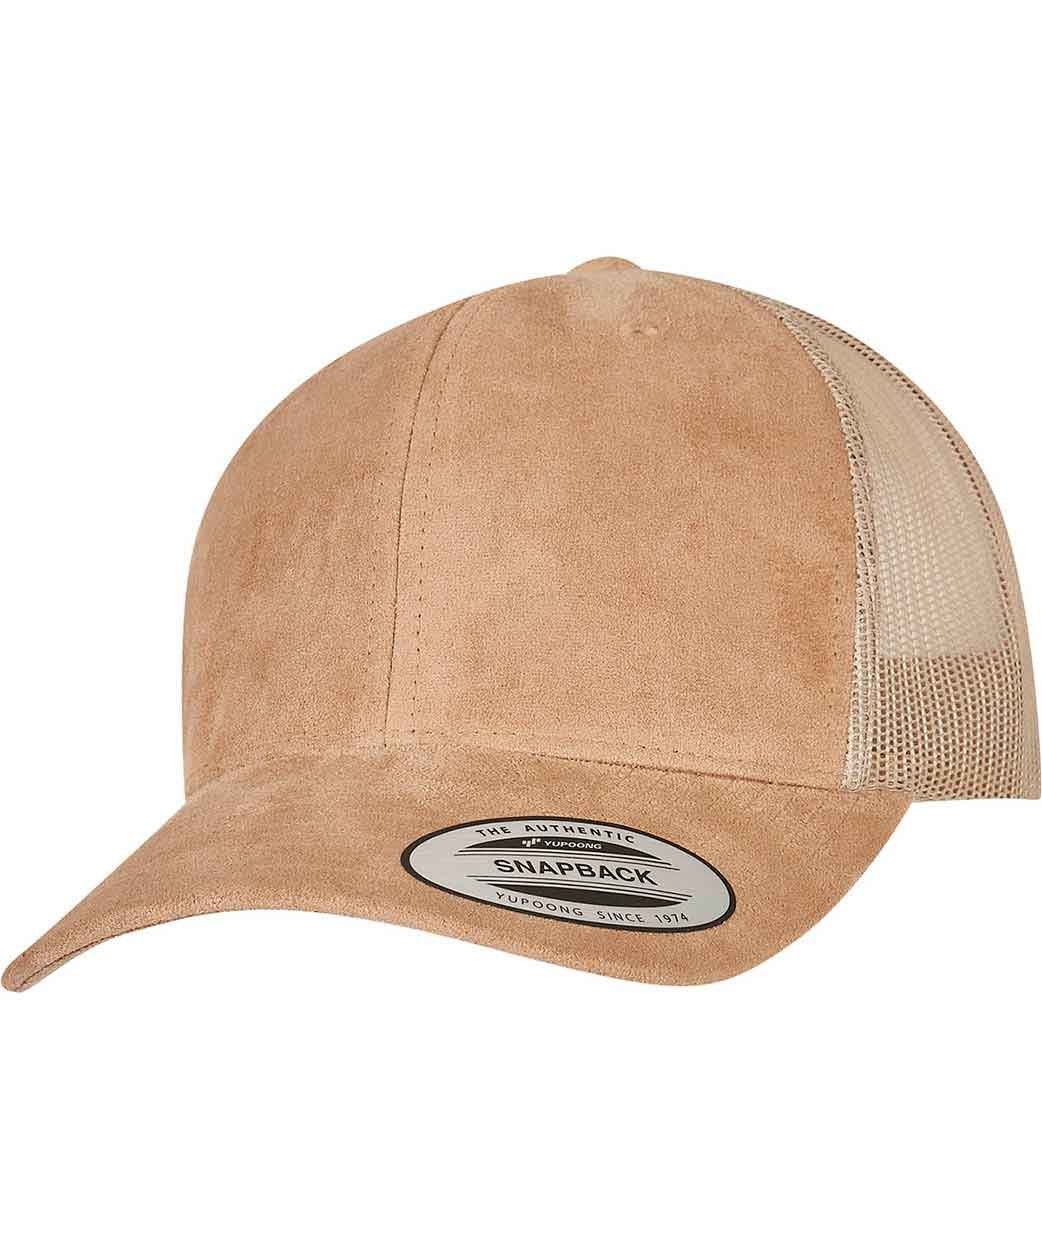 Imitation Yupoong cap leather Best suede Flexfit Caps by Baseball & - trucker 6606SU - Workwear - - Hats Caps Leisurewear